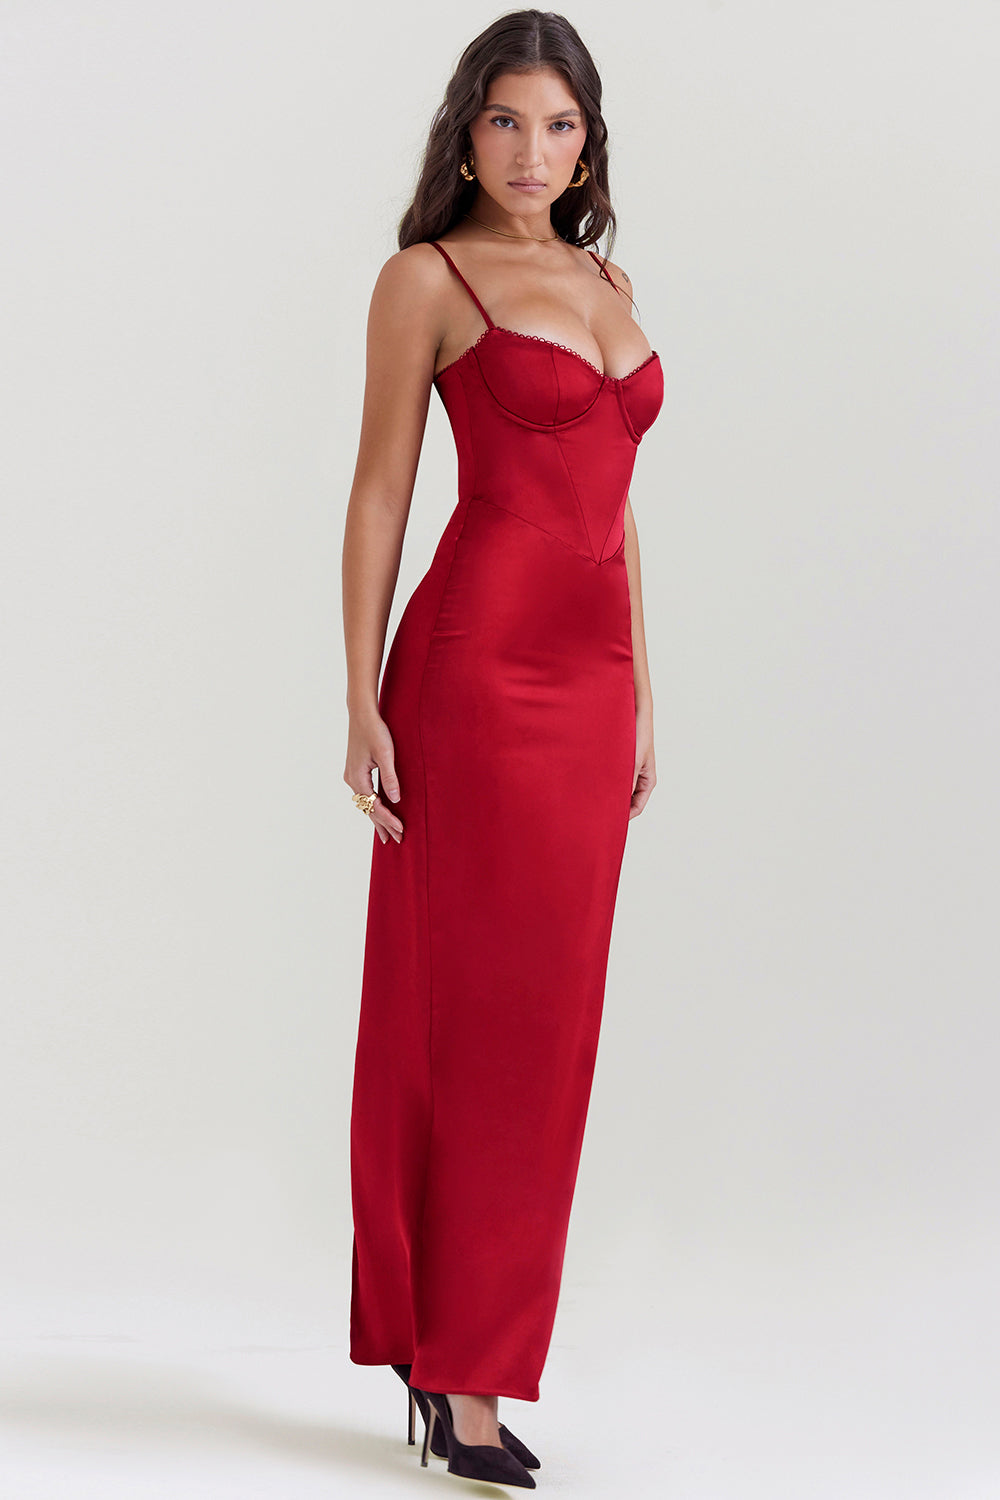 STEFANIA RUBY CORSET MAXI DRESS – Red